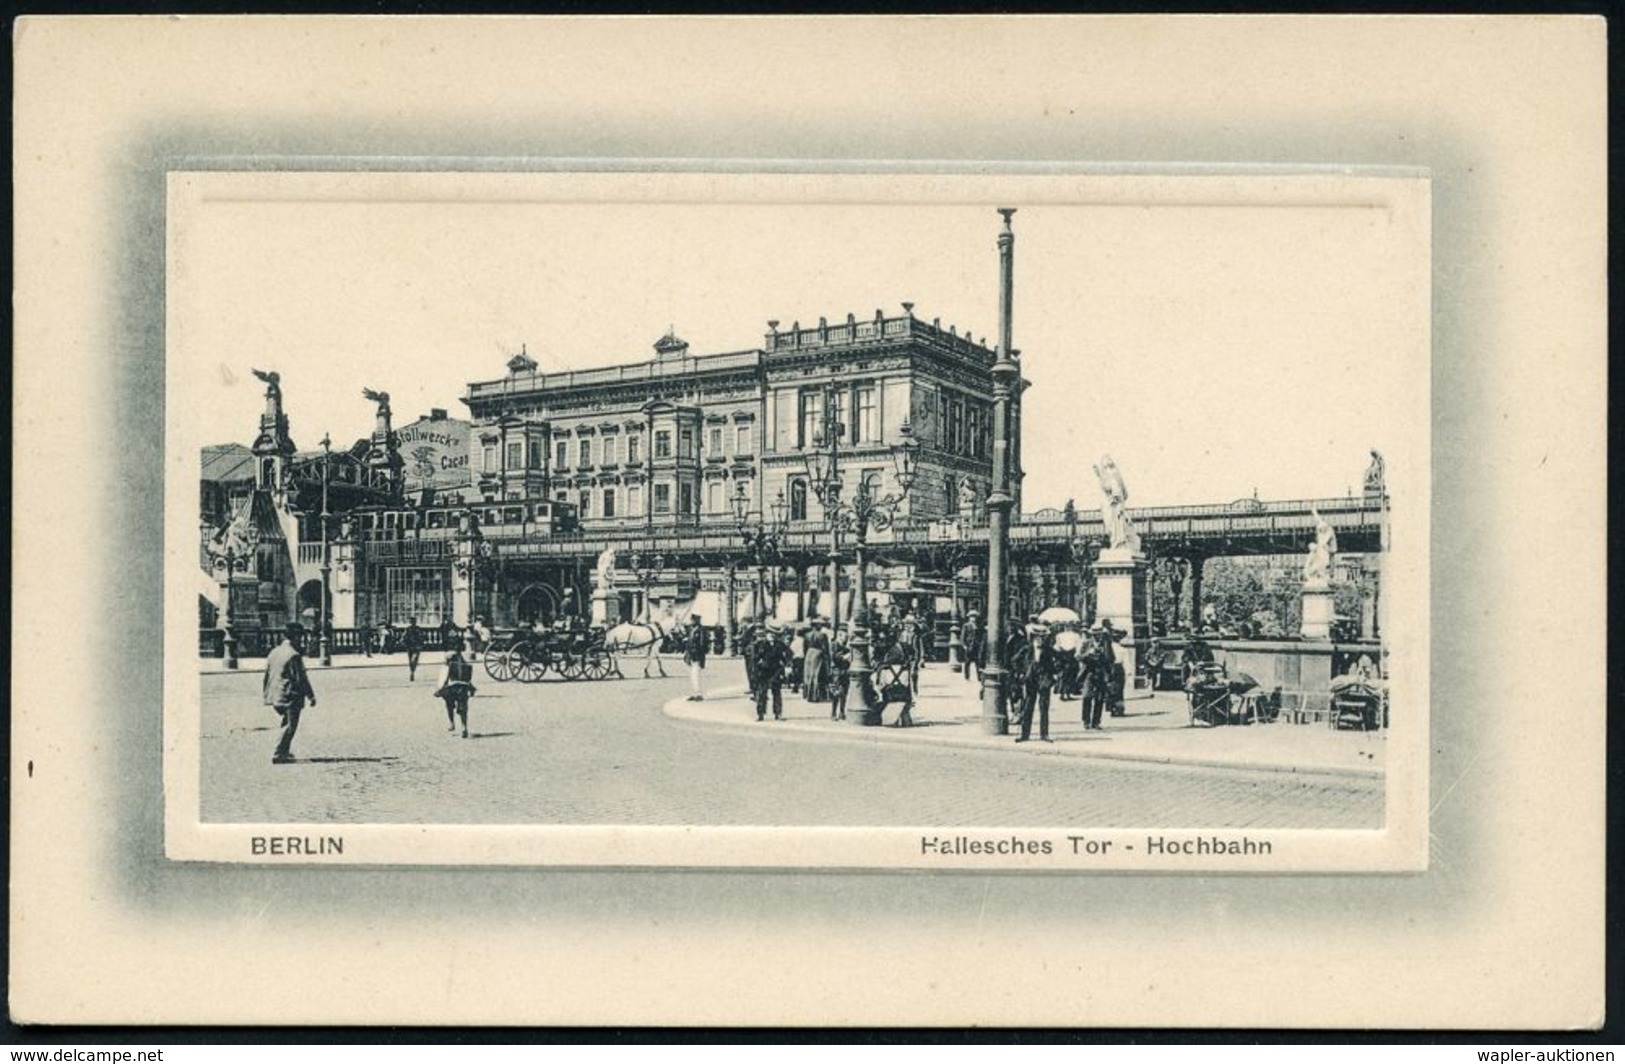 UNTERGRUNDBAHN /U-BAHN : Berlin-Kreuzberg 1903/19 U-Bahnhof Hallesches Tor, 7 verschiedene s/w.-Foto-Ak. , meist gebr., 